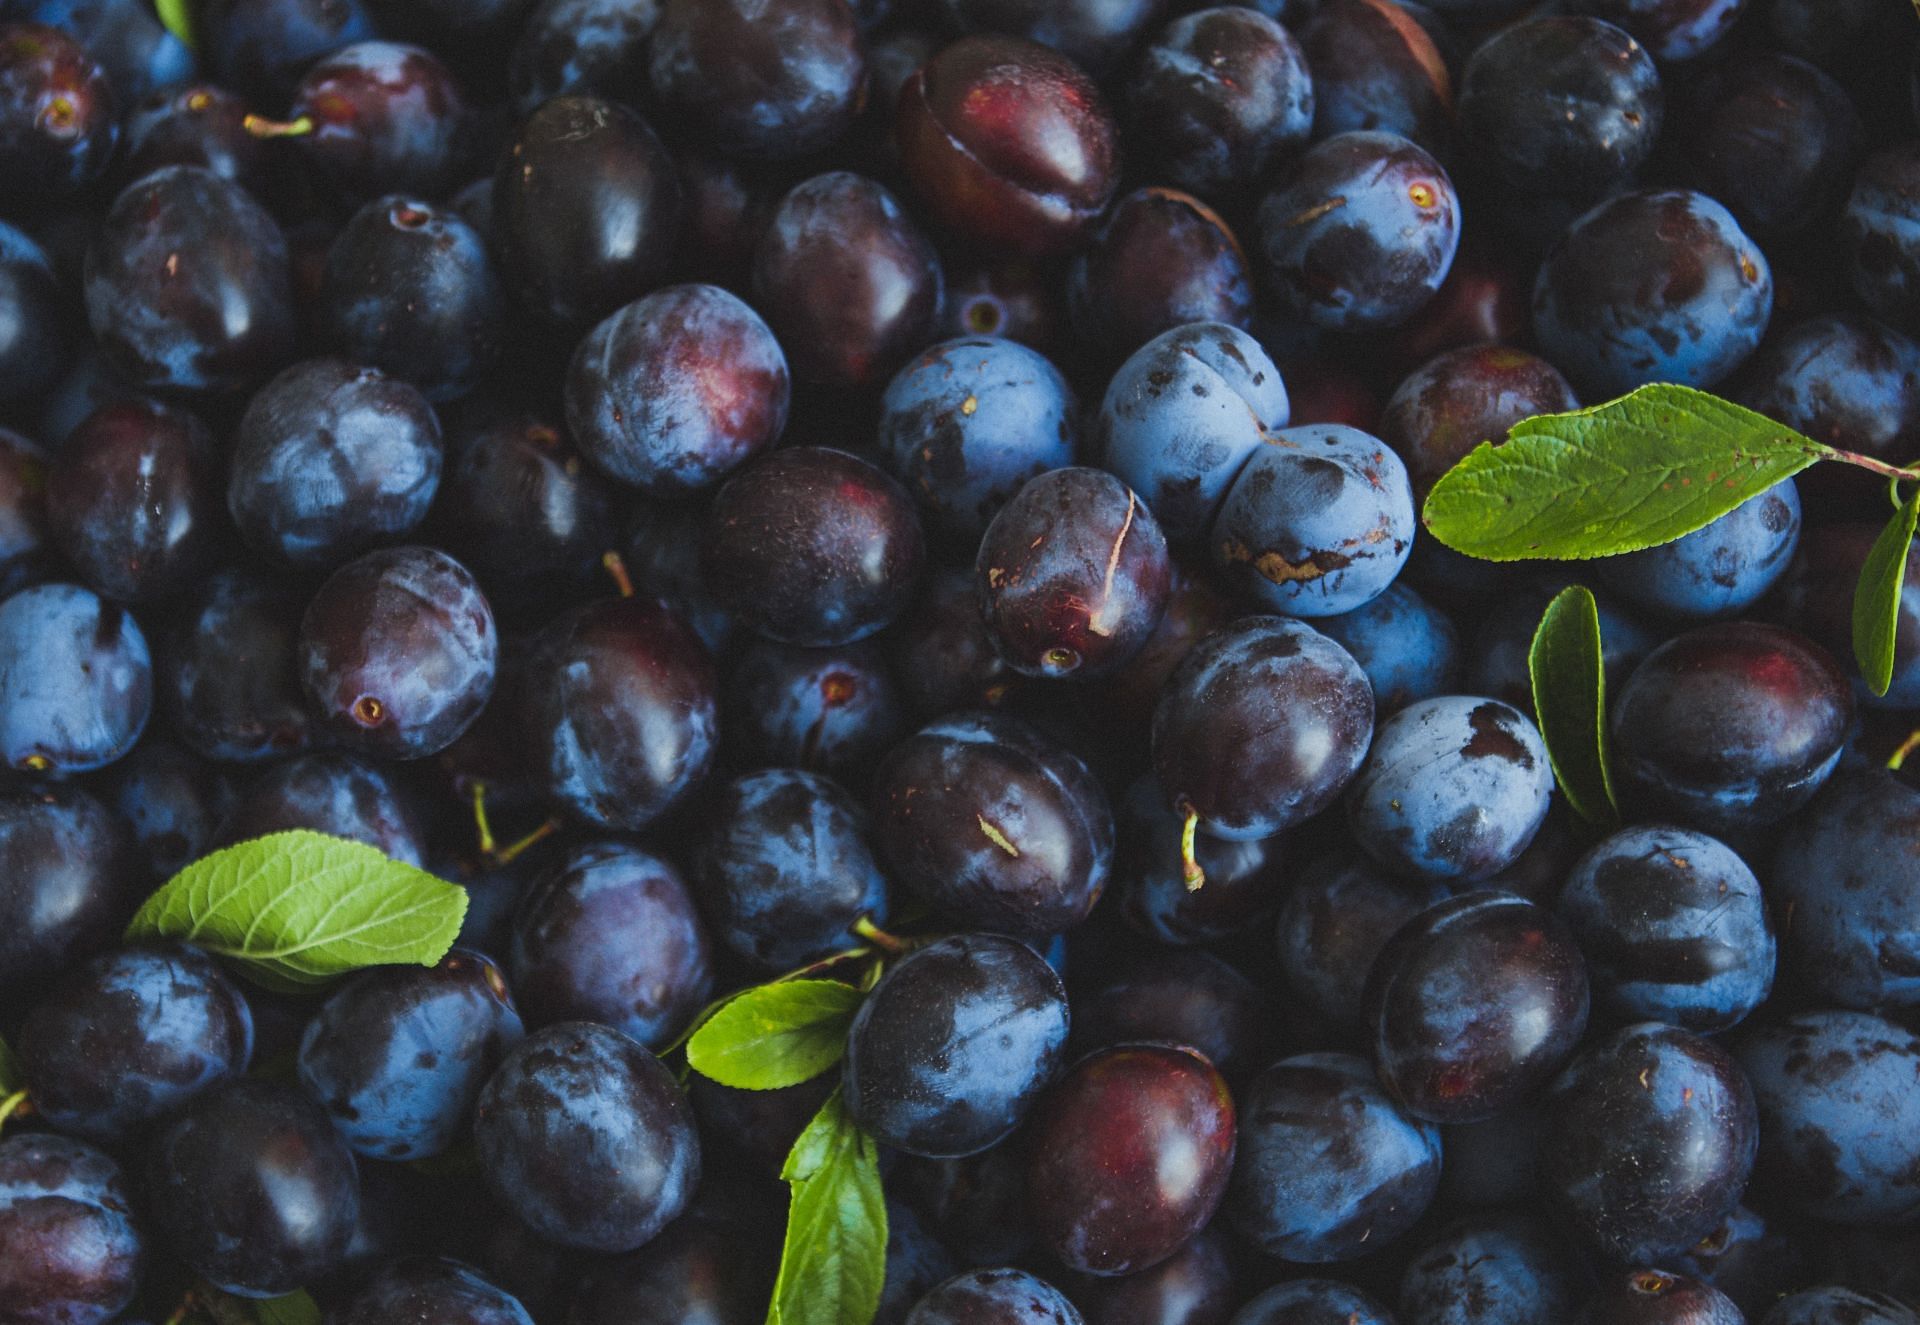 Berries are good for the heart. (Image via Unsplash/Jasper Benning)